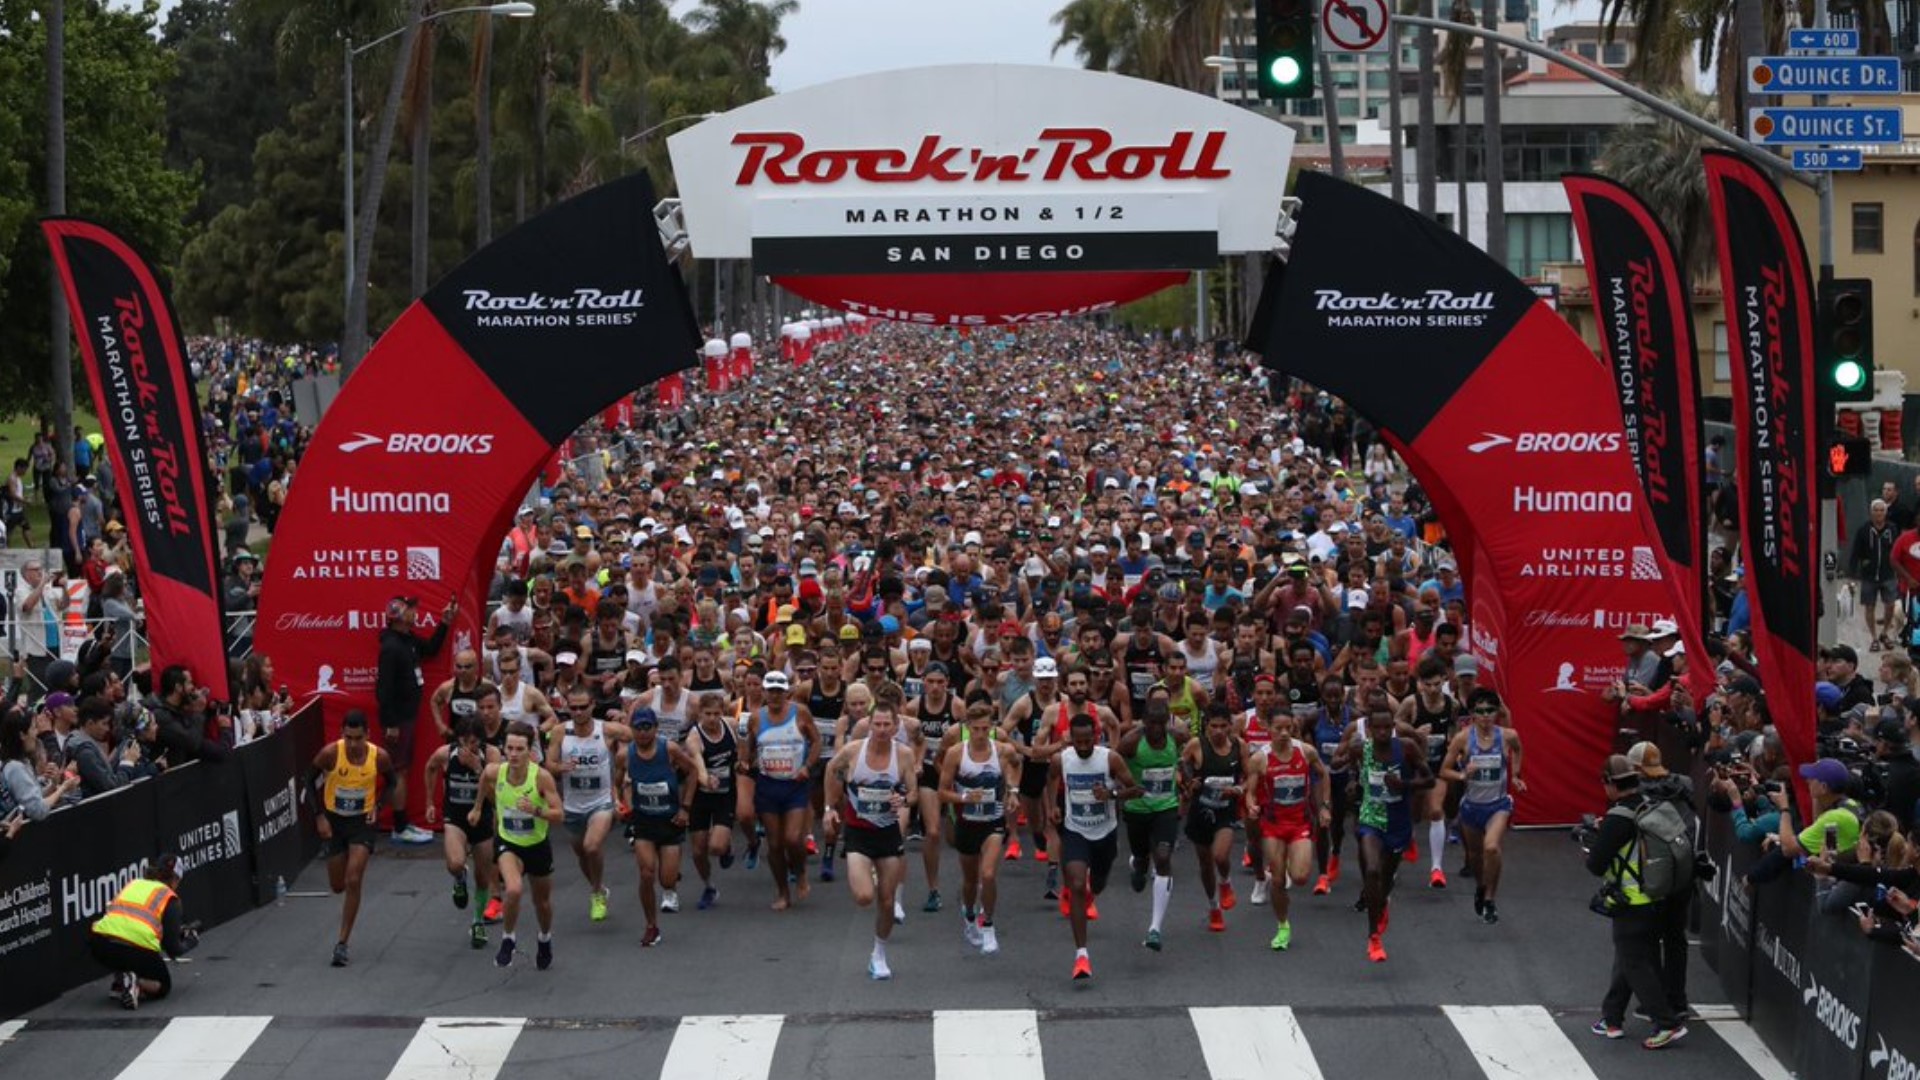 Runners hit San Diego streets for Rock 'N' Roll Marathon